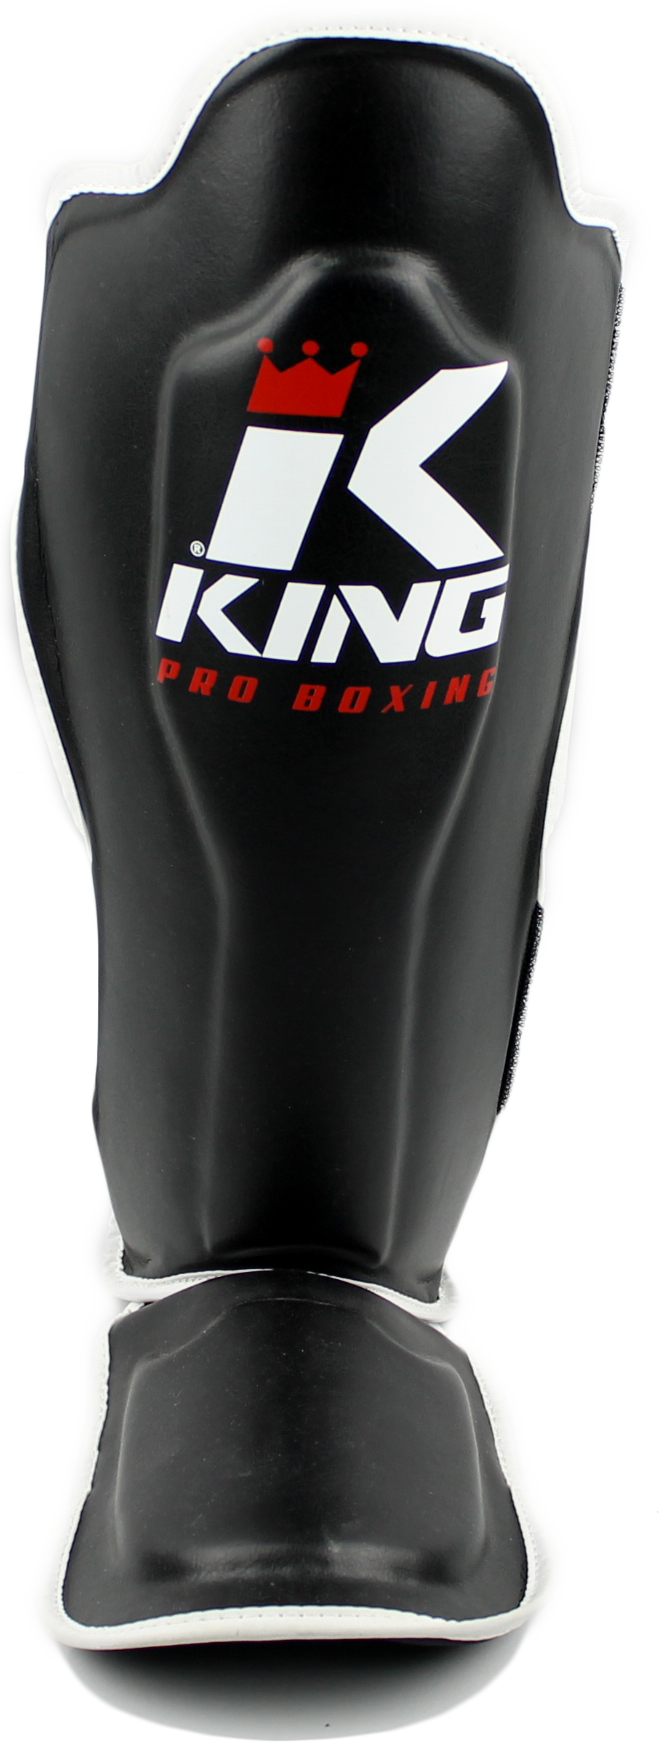 Protège-tibias King Pro Boxing - Noir/Blanc